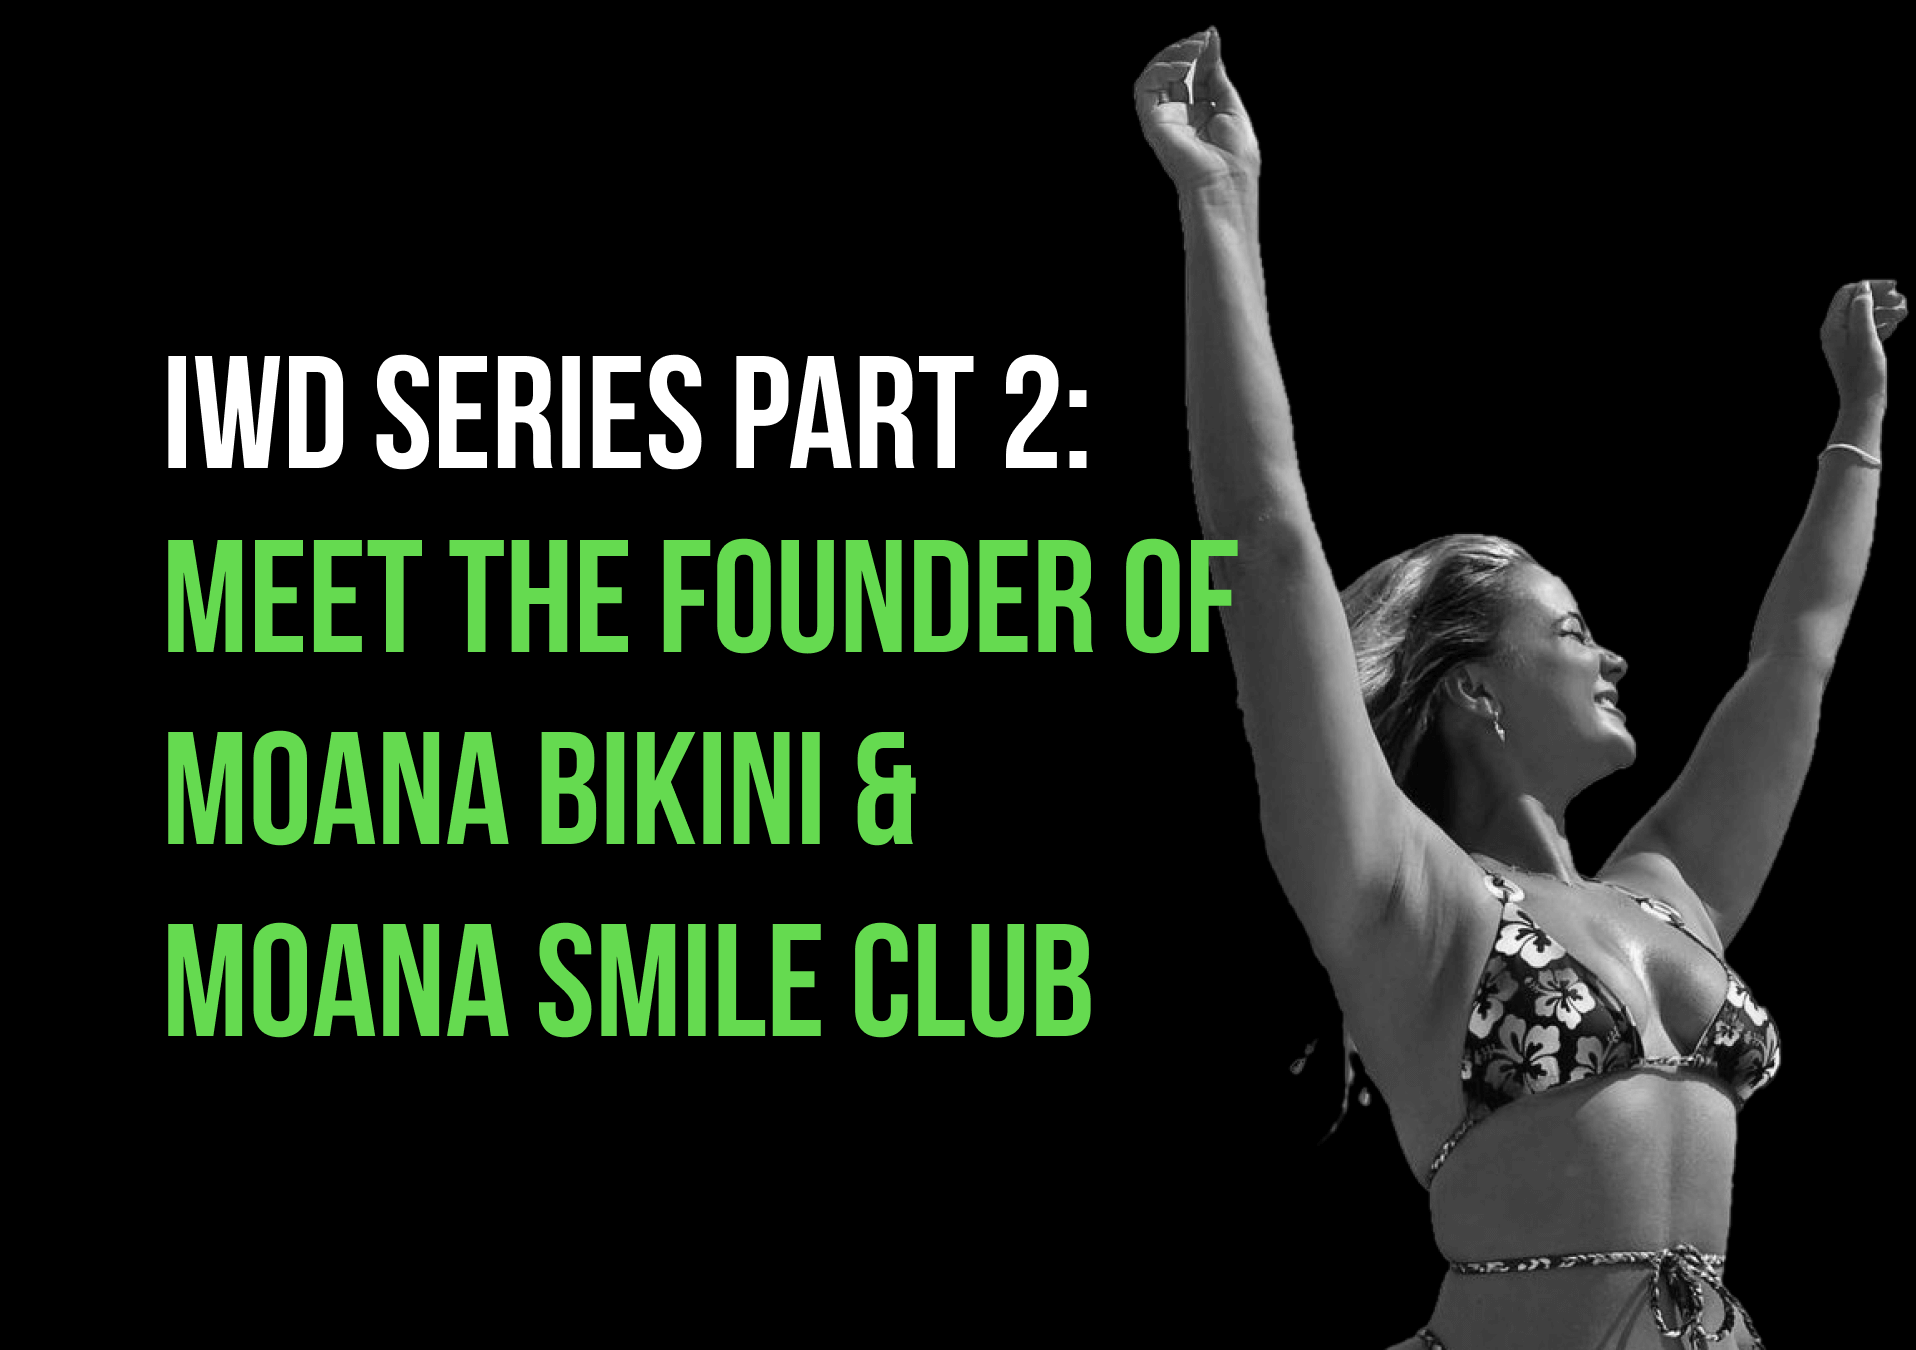 IWD SERIES: Meet the founder of Moana Bikini